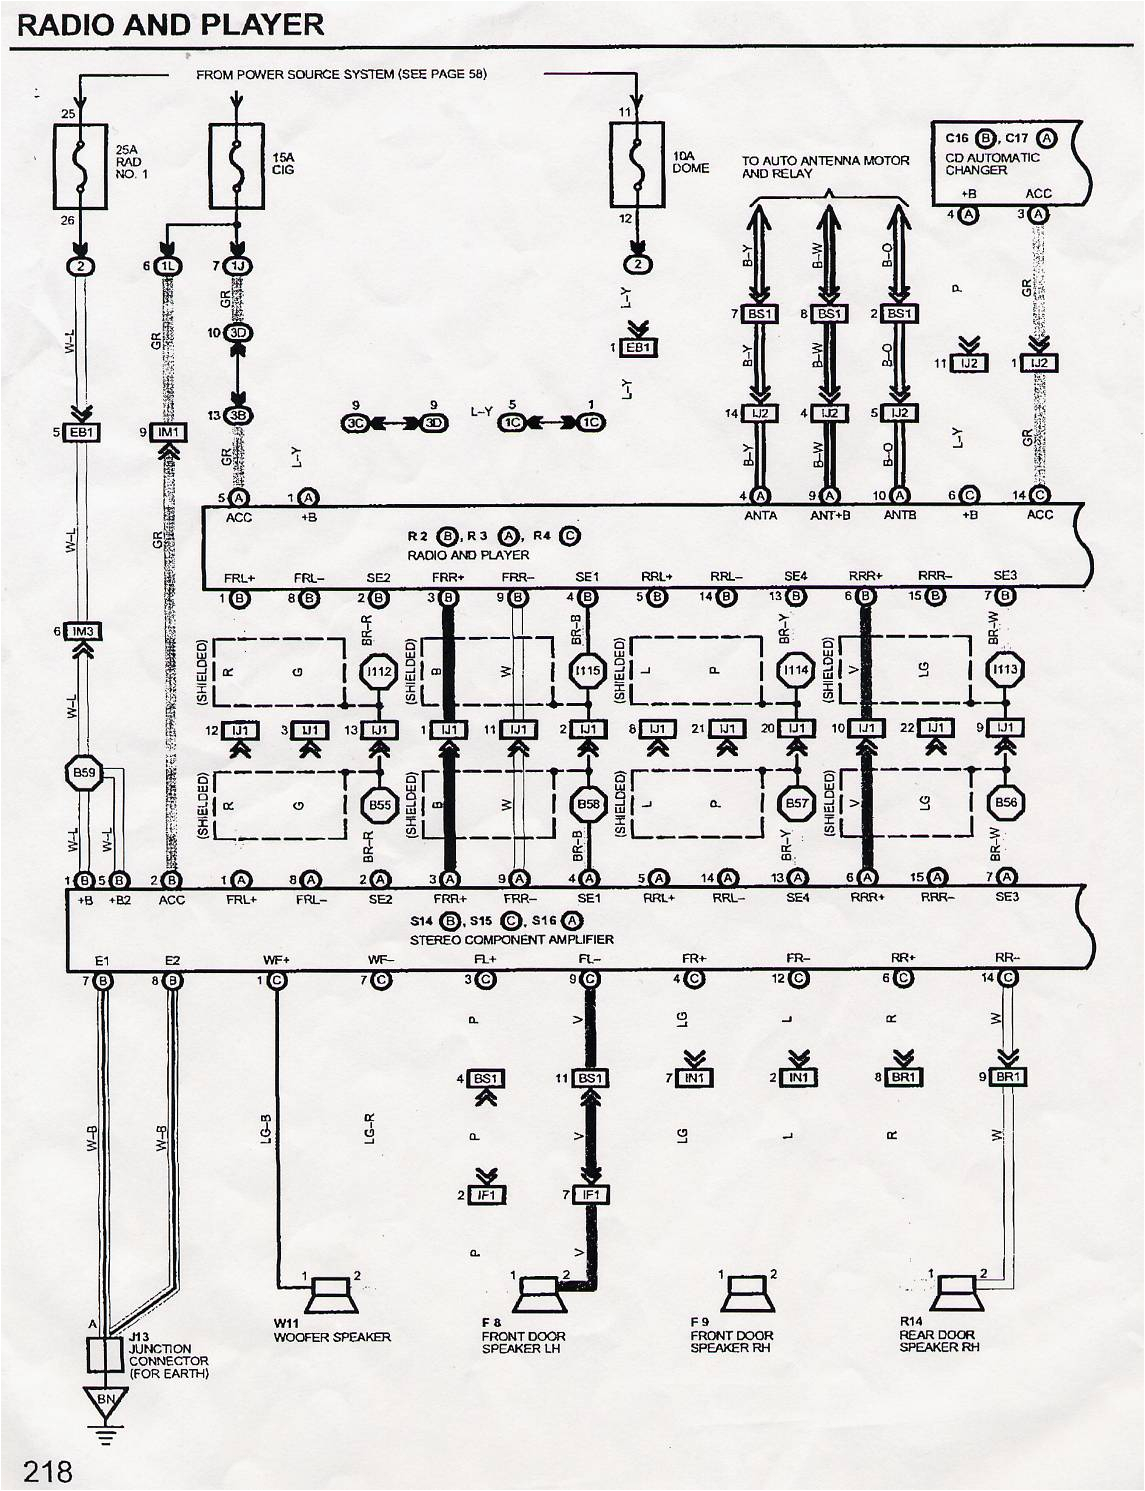 93 lexus gs300 radio wiring diagram wiring diagram expertwiring diagram for 1993 lexus gs300 wiring diagram